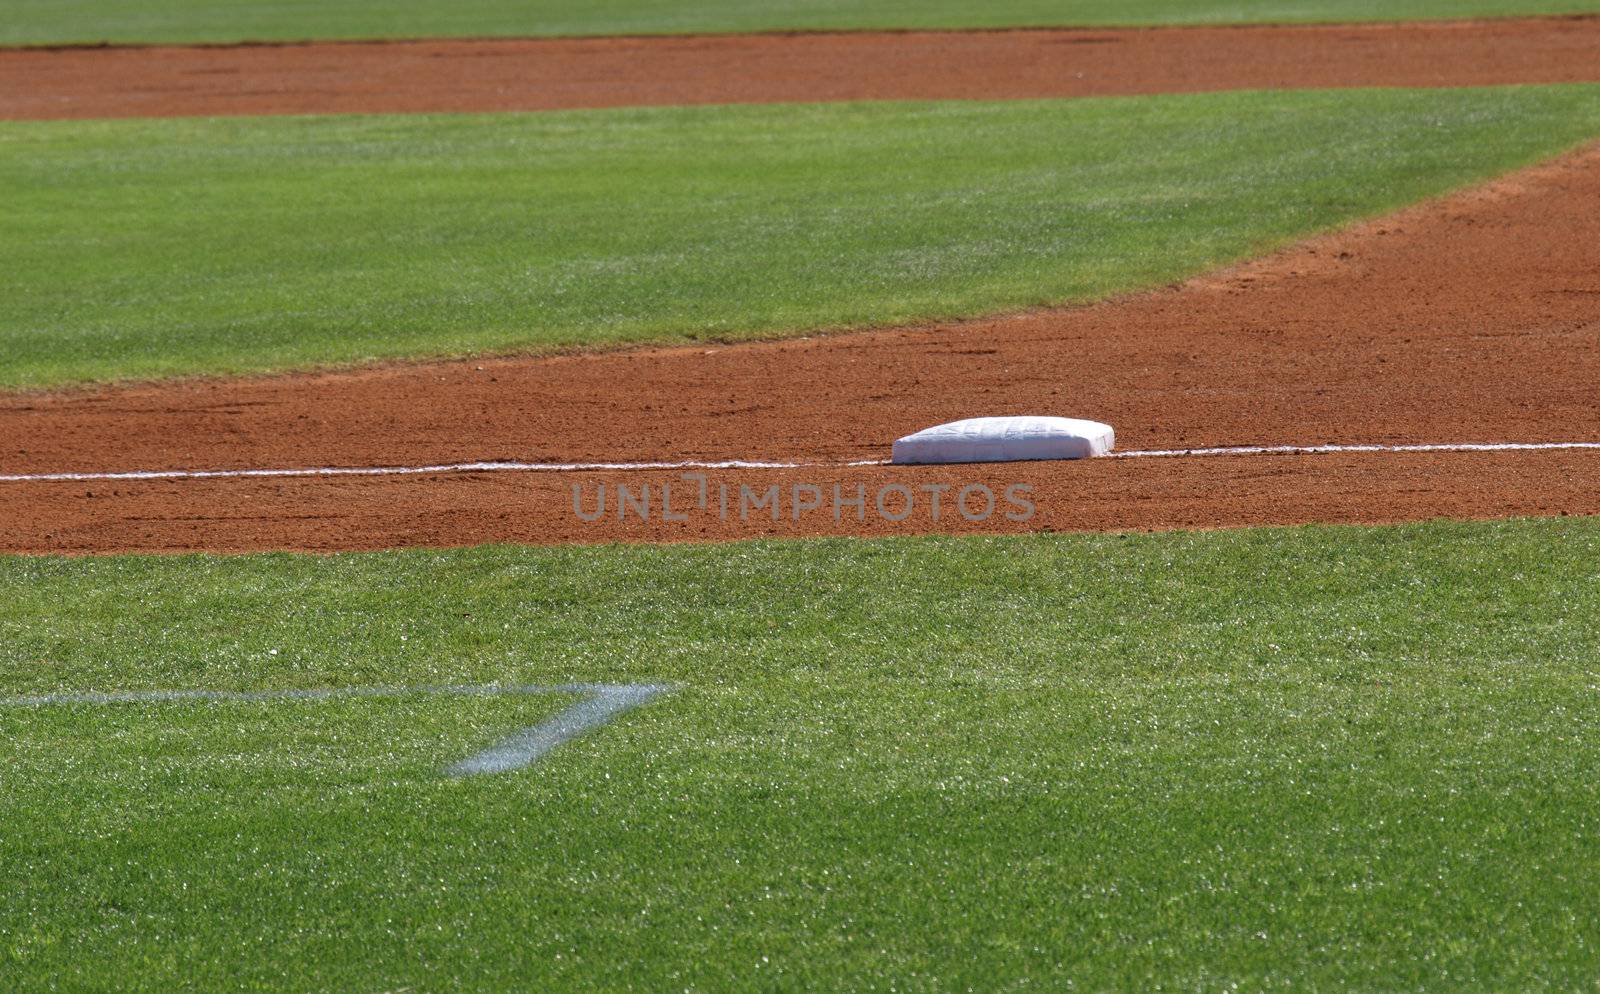 First base view shown closeup on a baseball diamond